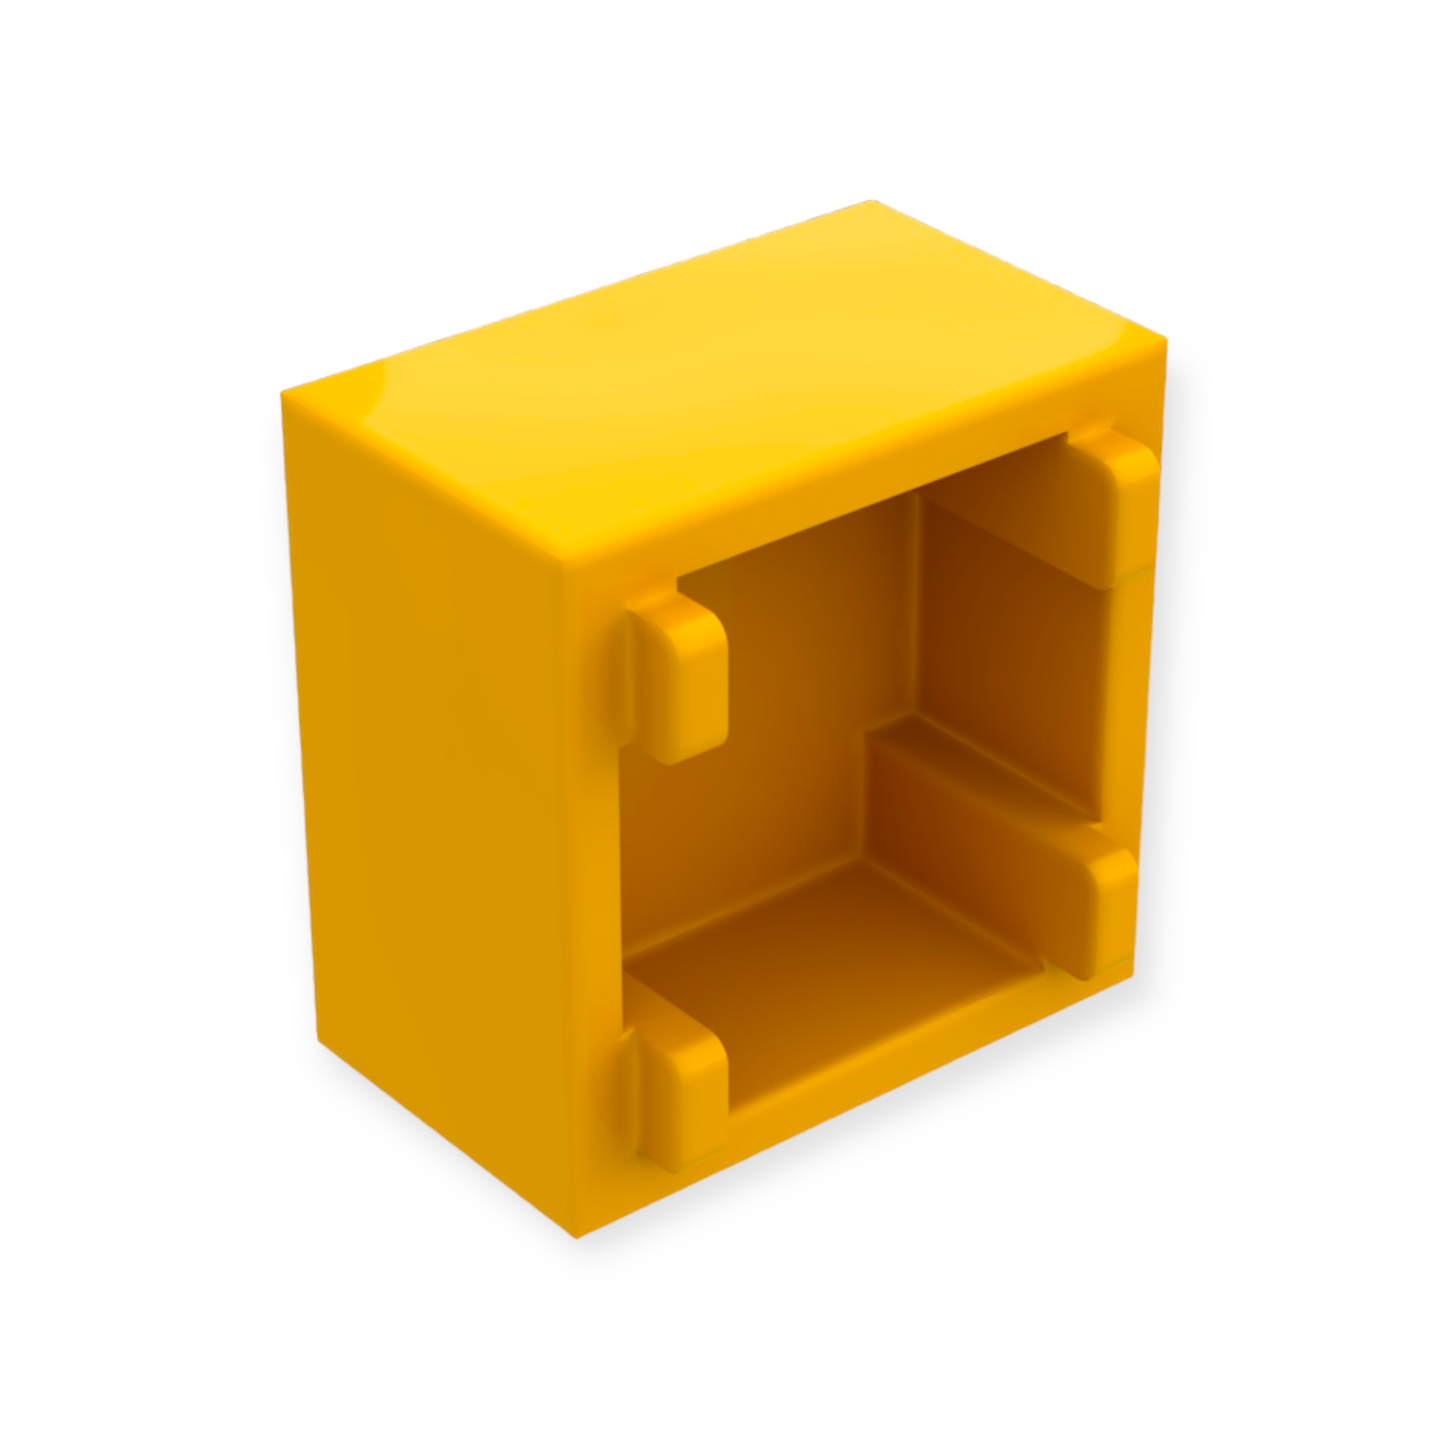 LEGO Container Box 2x2x1 in Bright Light Orange